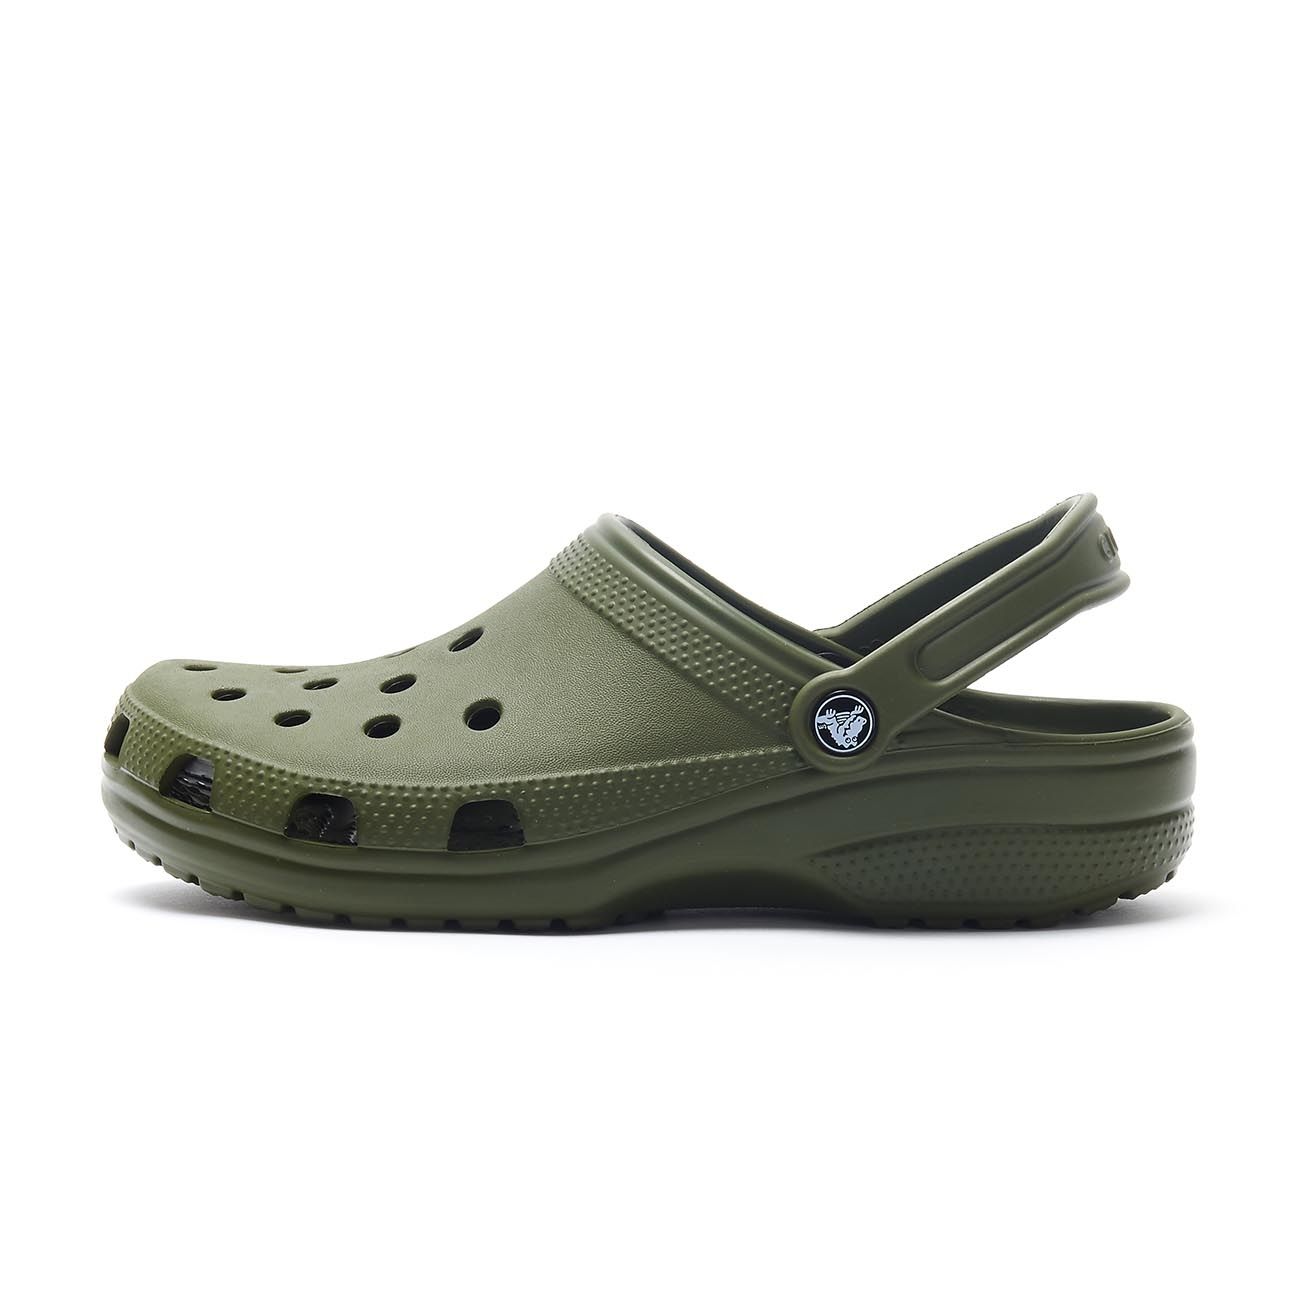 crocs classic army green